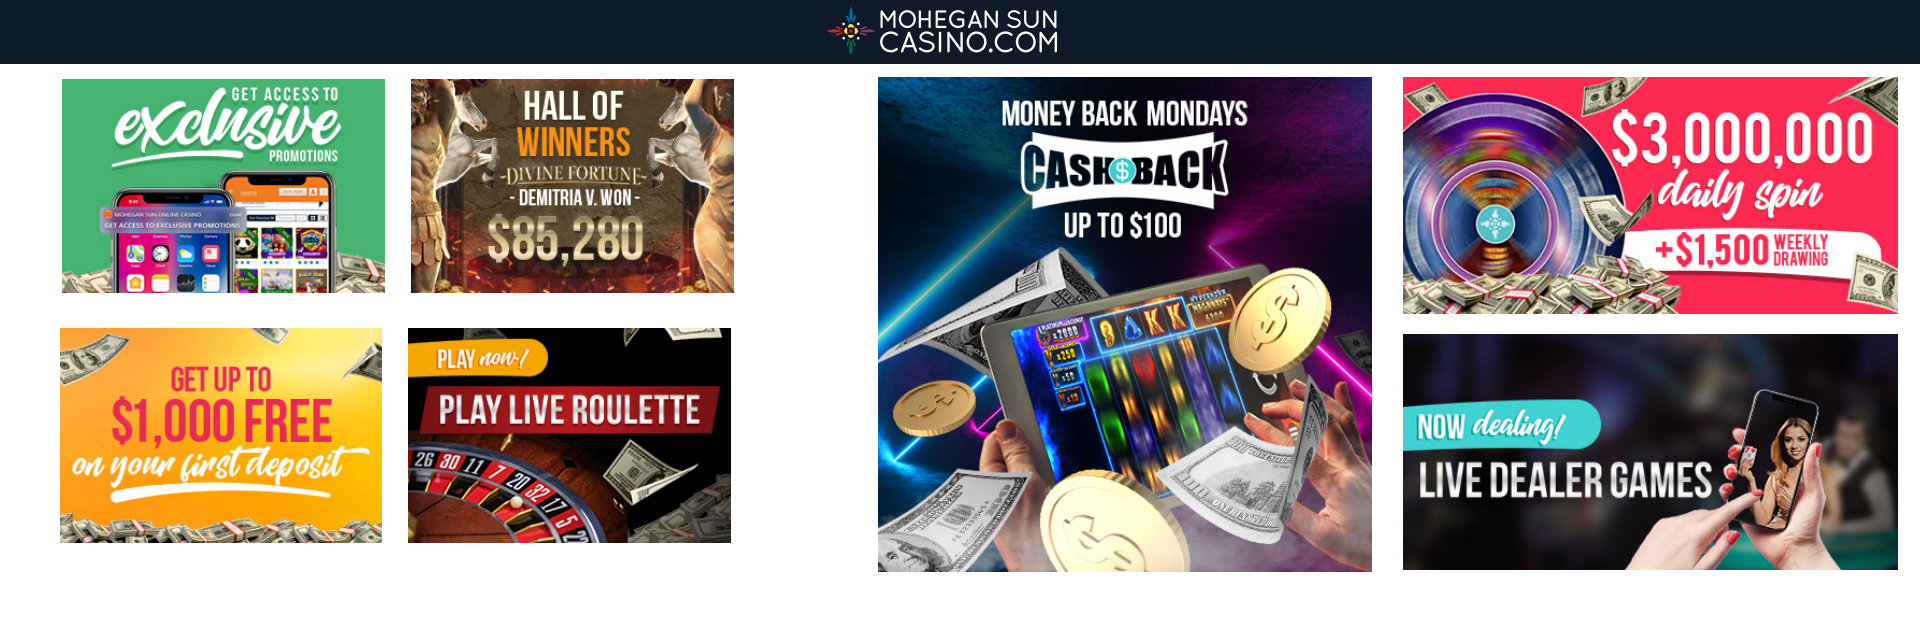 Mohegan Sun Online Casino download the last version for ipod